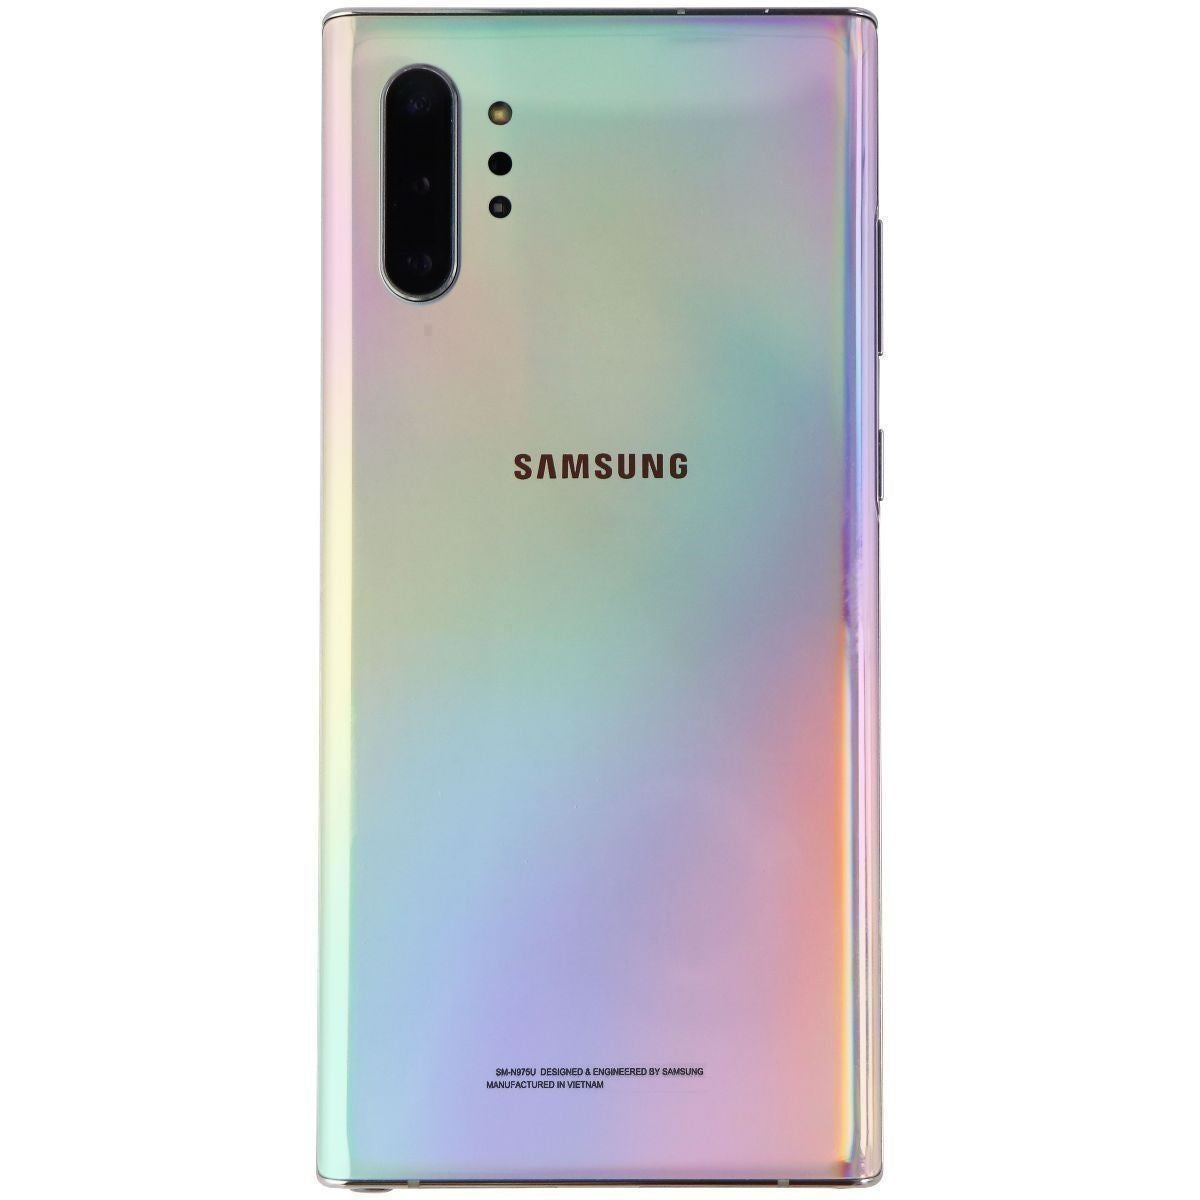 Samsung Galaxy Note10+ (6.8-in) SM-N975U (Unlocked) - 256GB / Aura Glow Cell Phones & Smartphones Samsung    - Simple Cell Bulk Wholesale Pricing - USA Seller